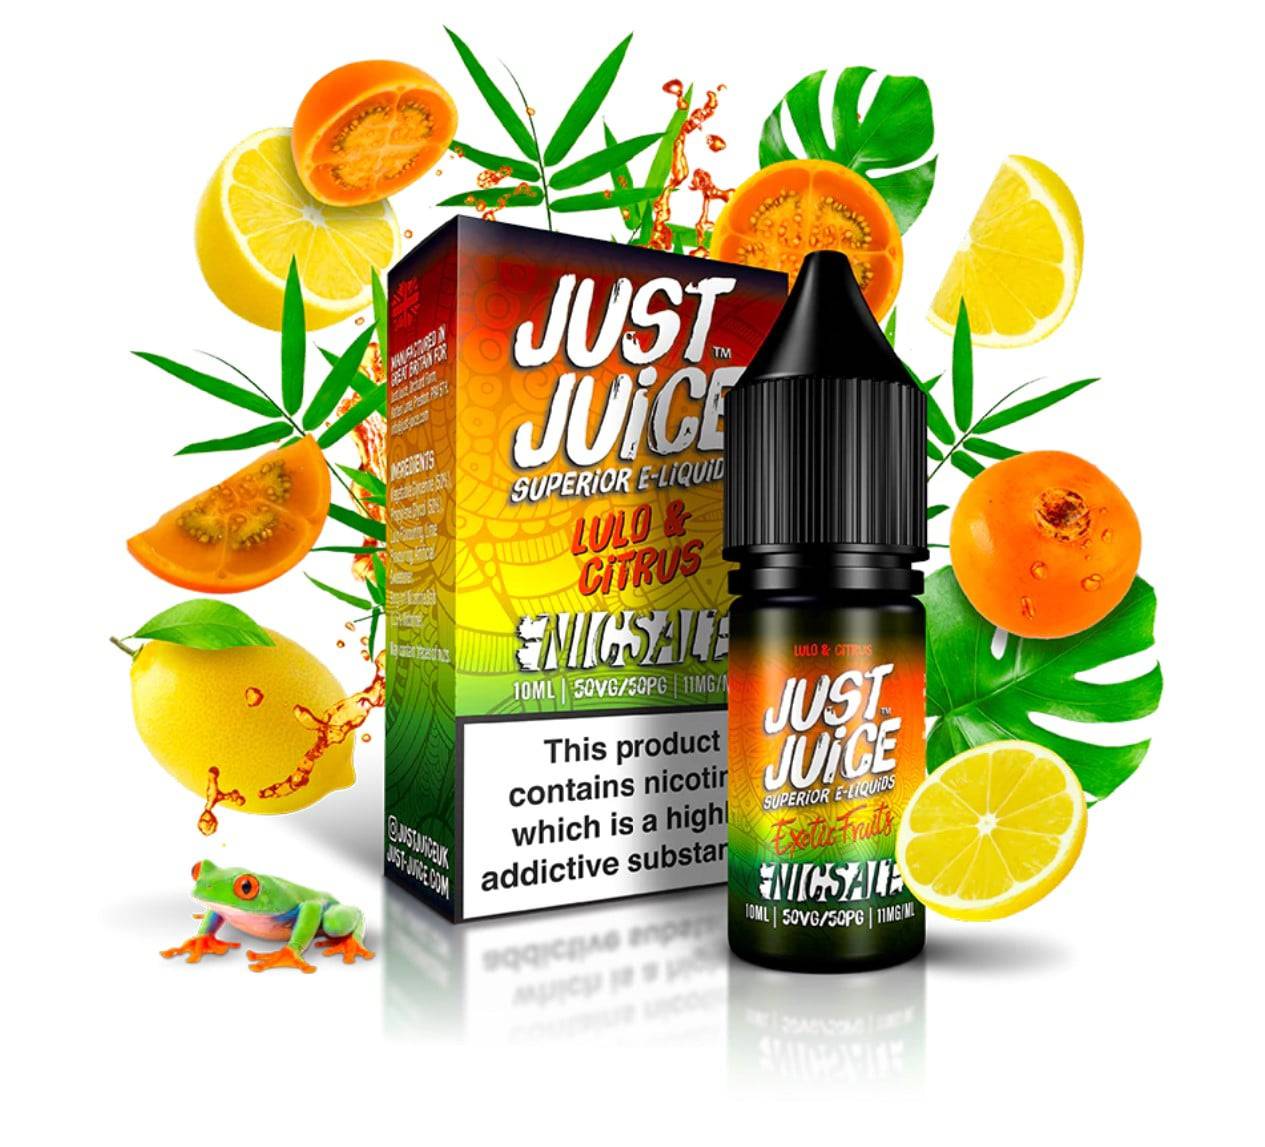 JUST JUICE - Lulo & Citrus 10ml E-Liquid - The British Vape Company